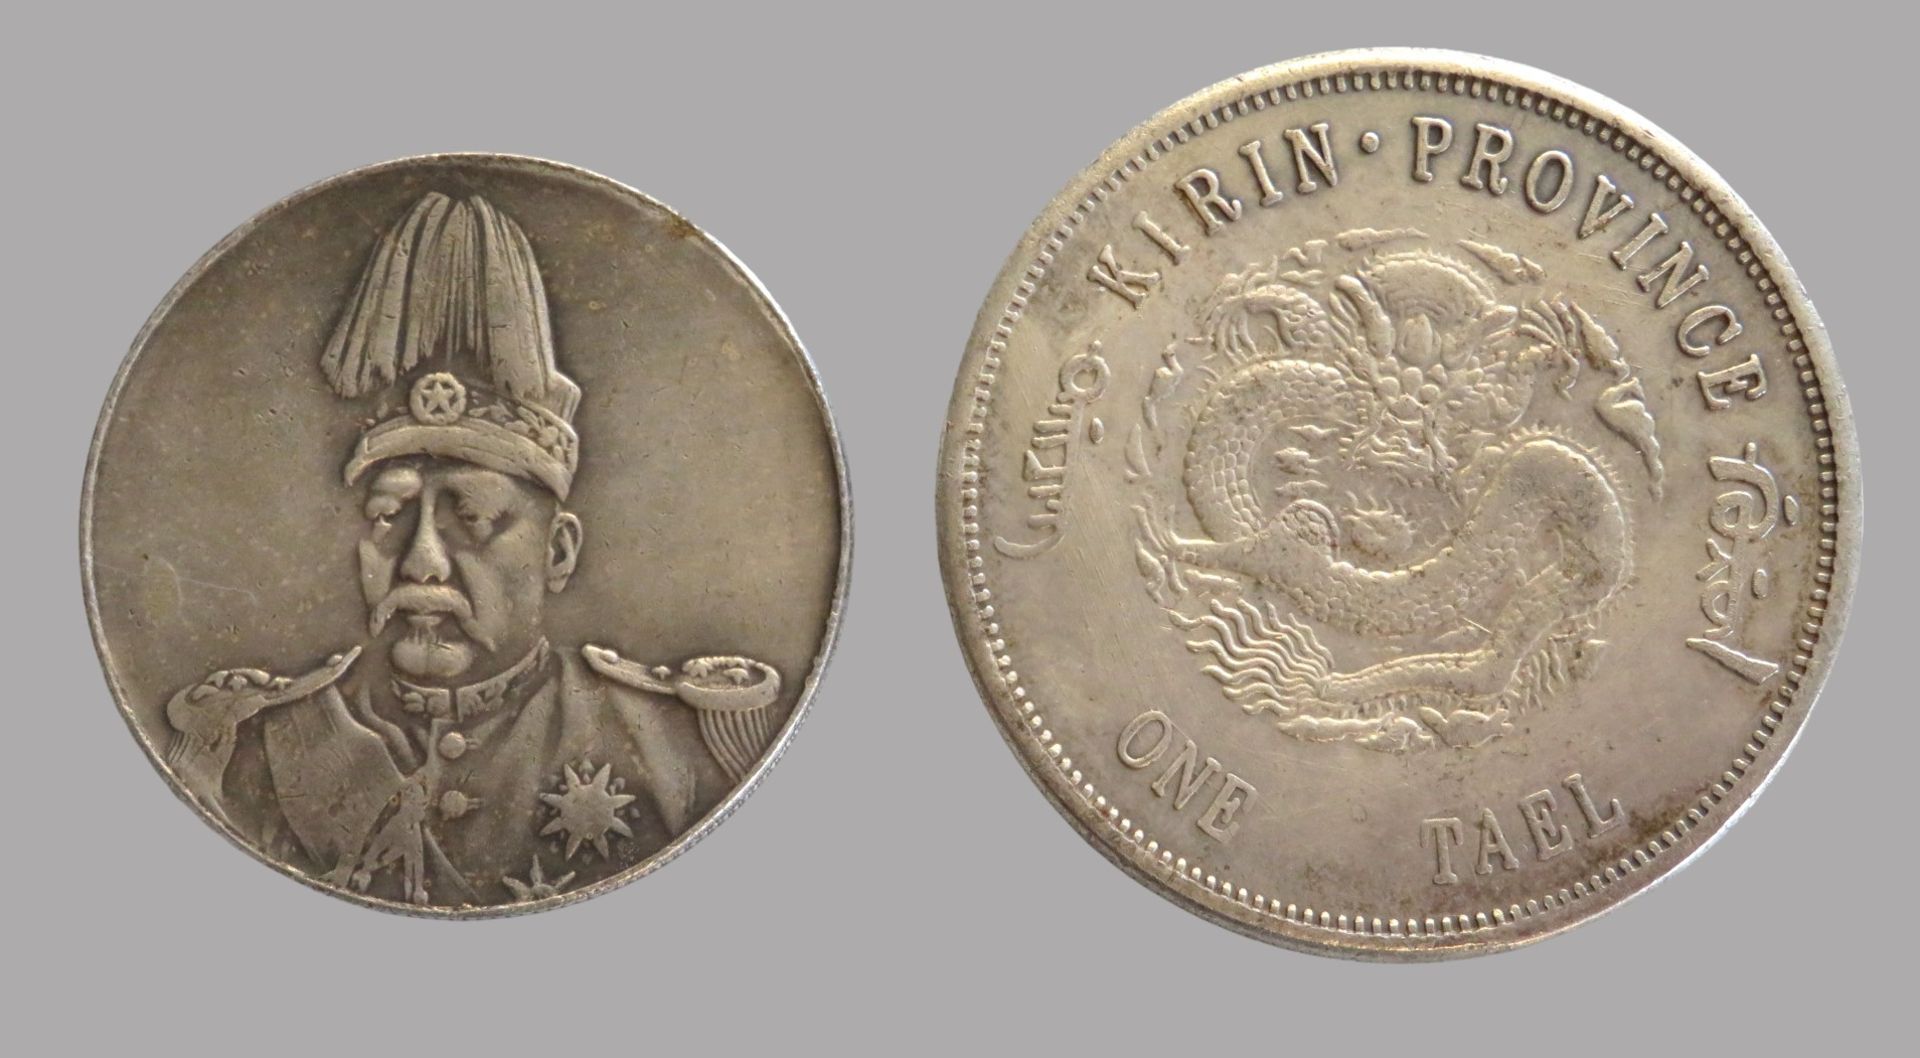 2 Silbermünzen, China, 1 x Kirin Province, One Tael, zus. 44,8 g, d 3,9/4,5 cm.